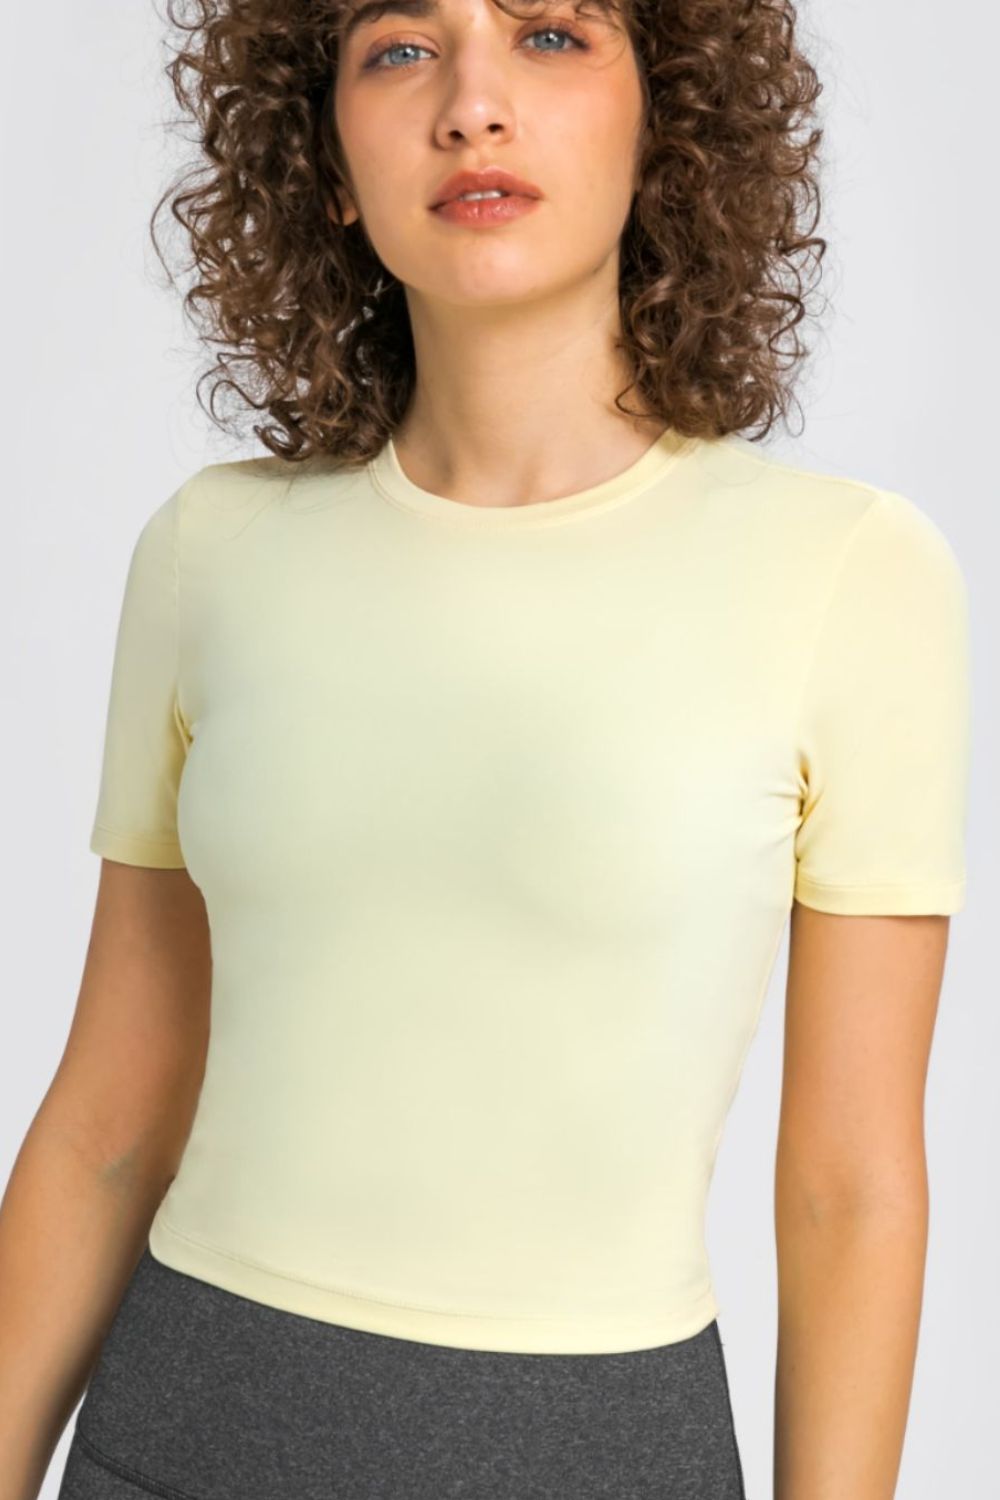 Round Neck Short Sleeve Yoga Tee Print on any thing USA/STOD clothes